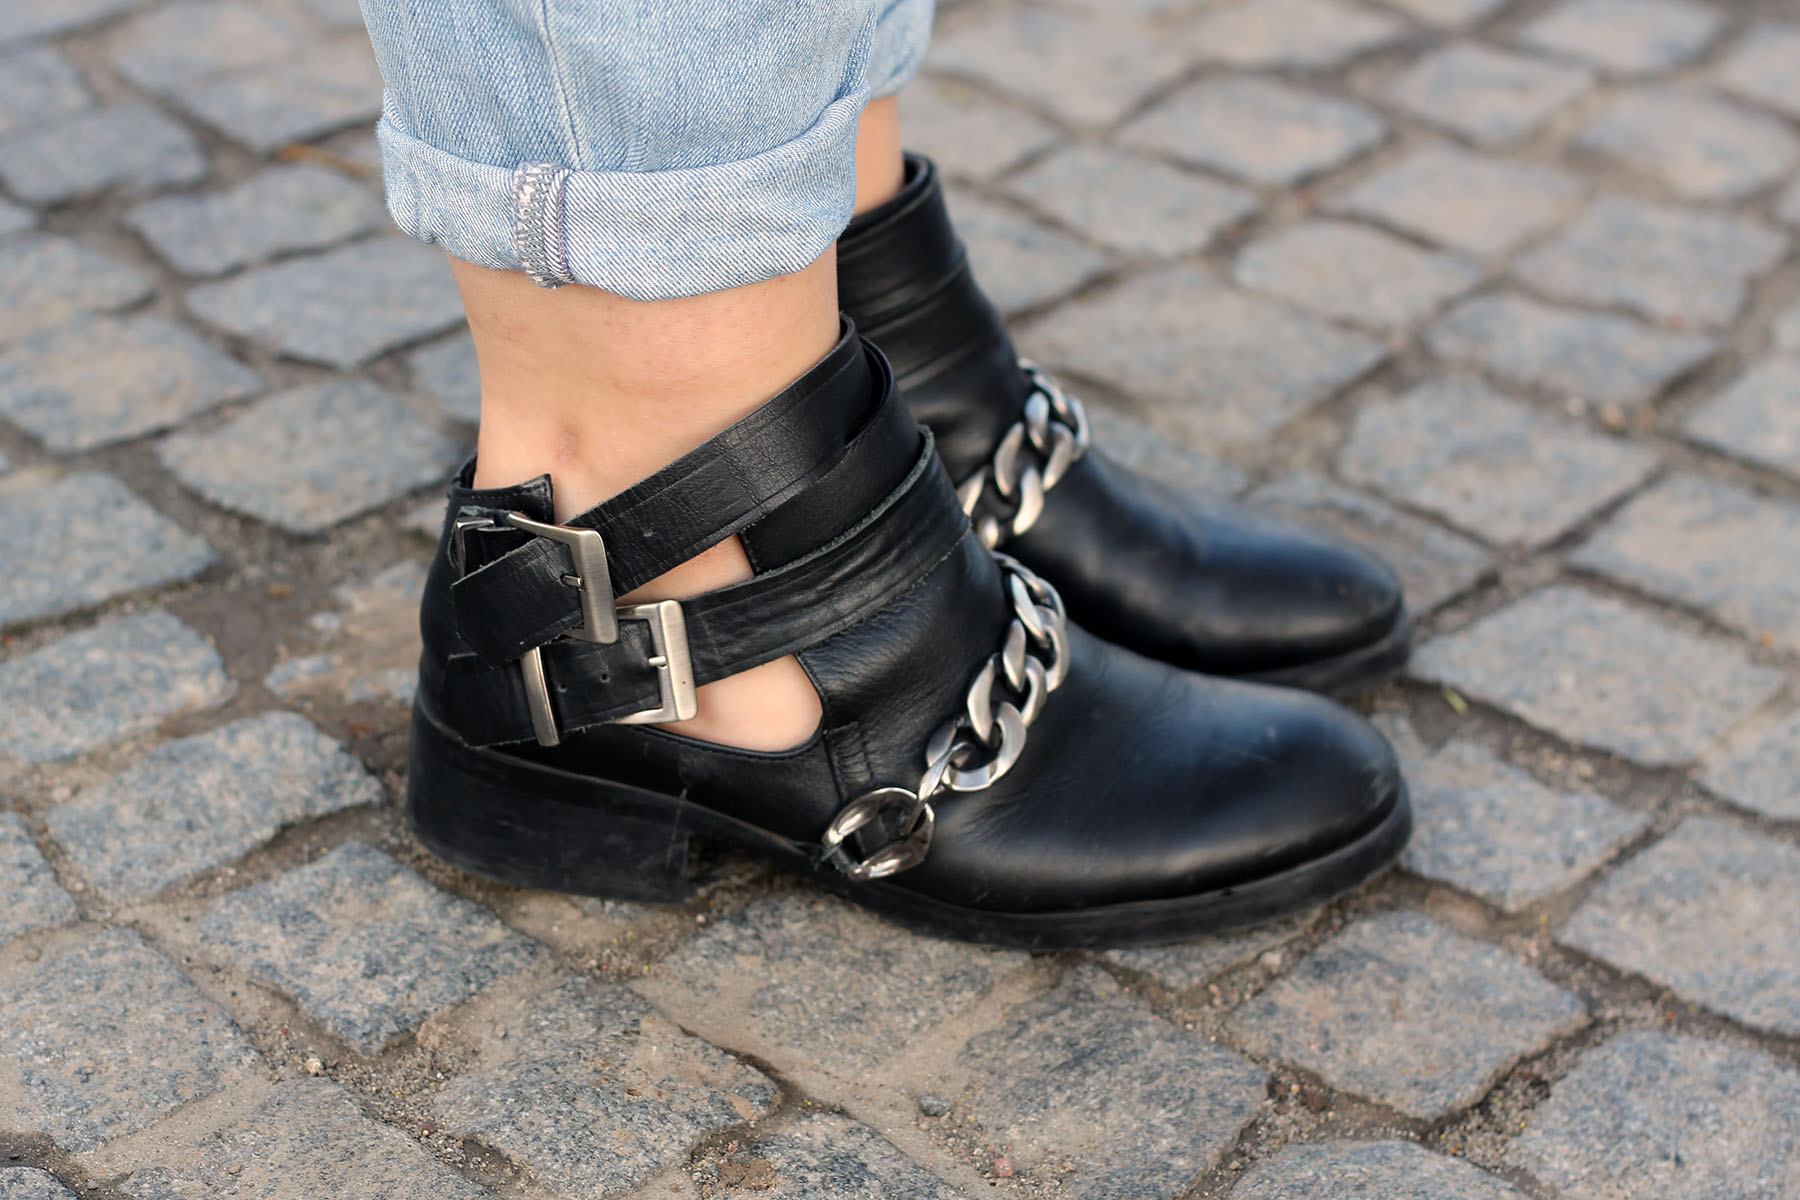 boots-zara-stiefeletten-stiefel-outfit-modeblog